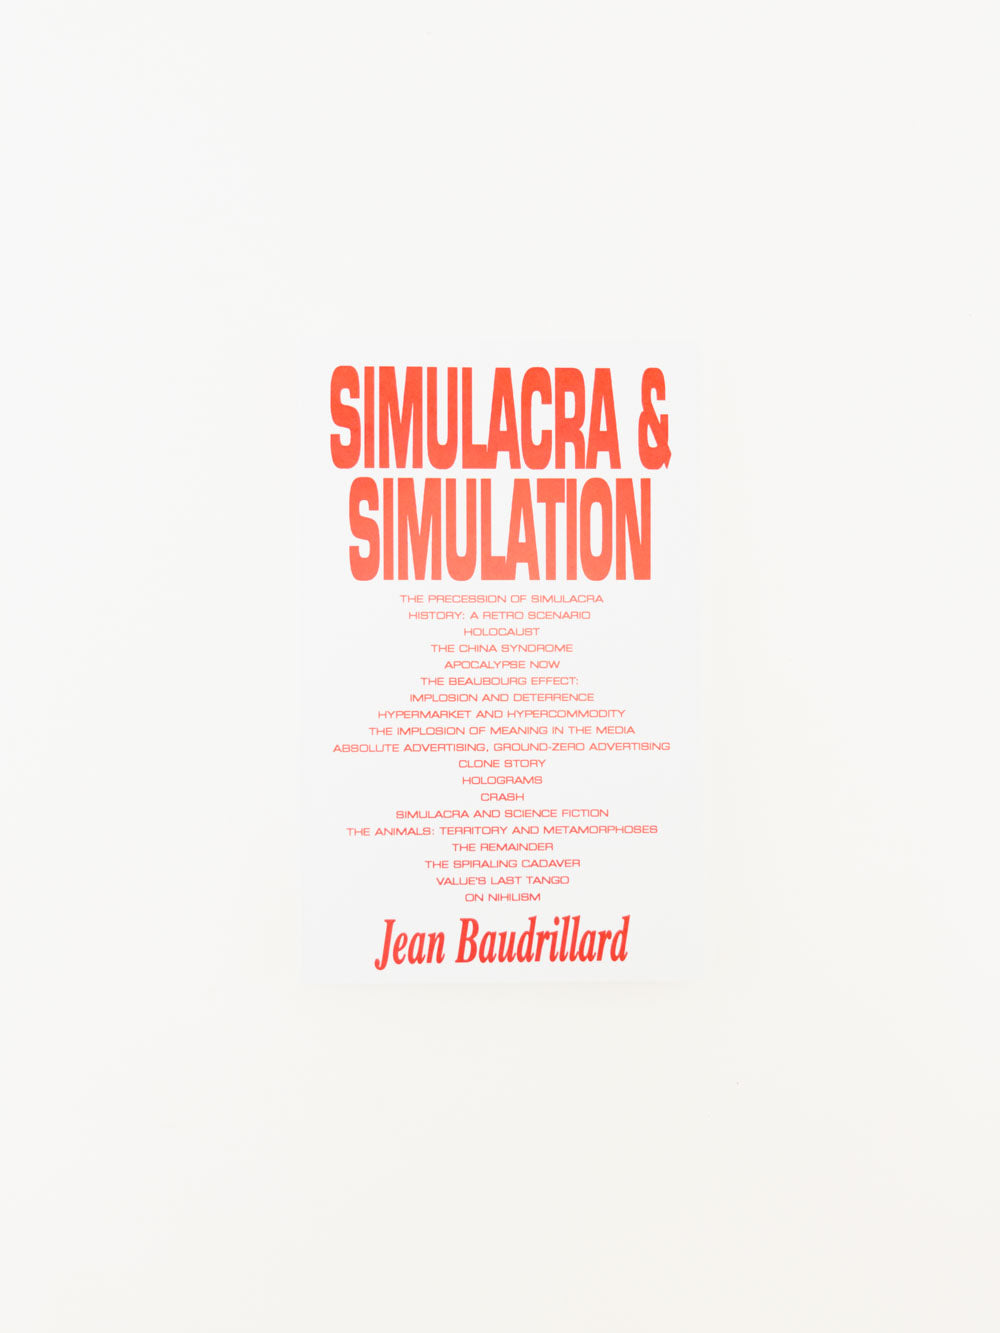 SIMULACRA & SIMULATION (2nd Ed.)